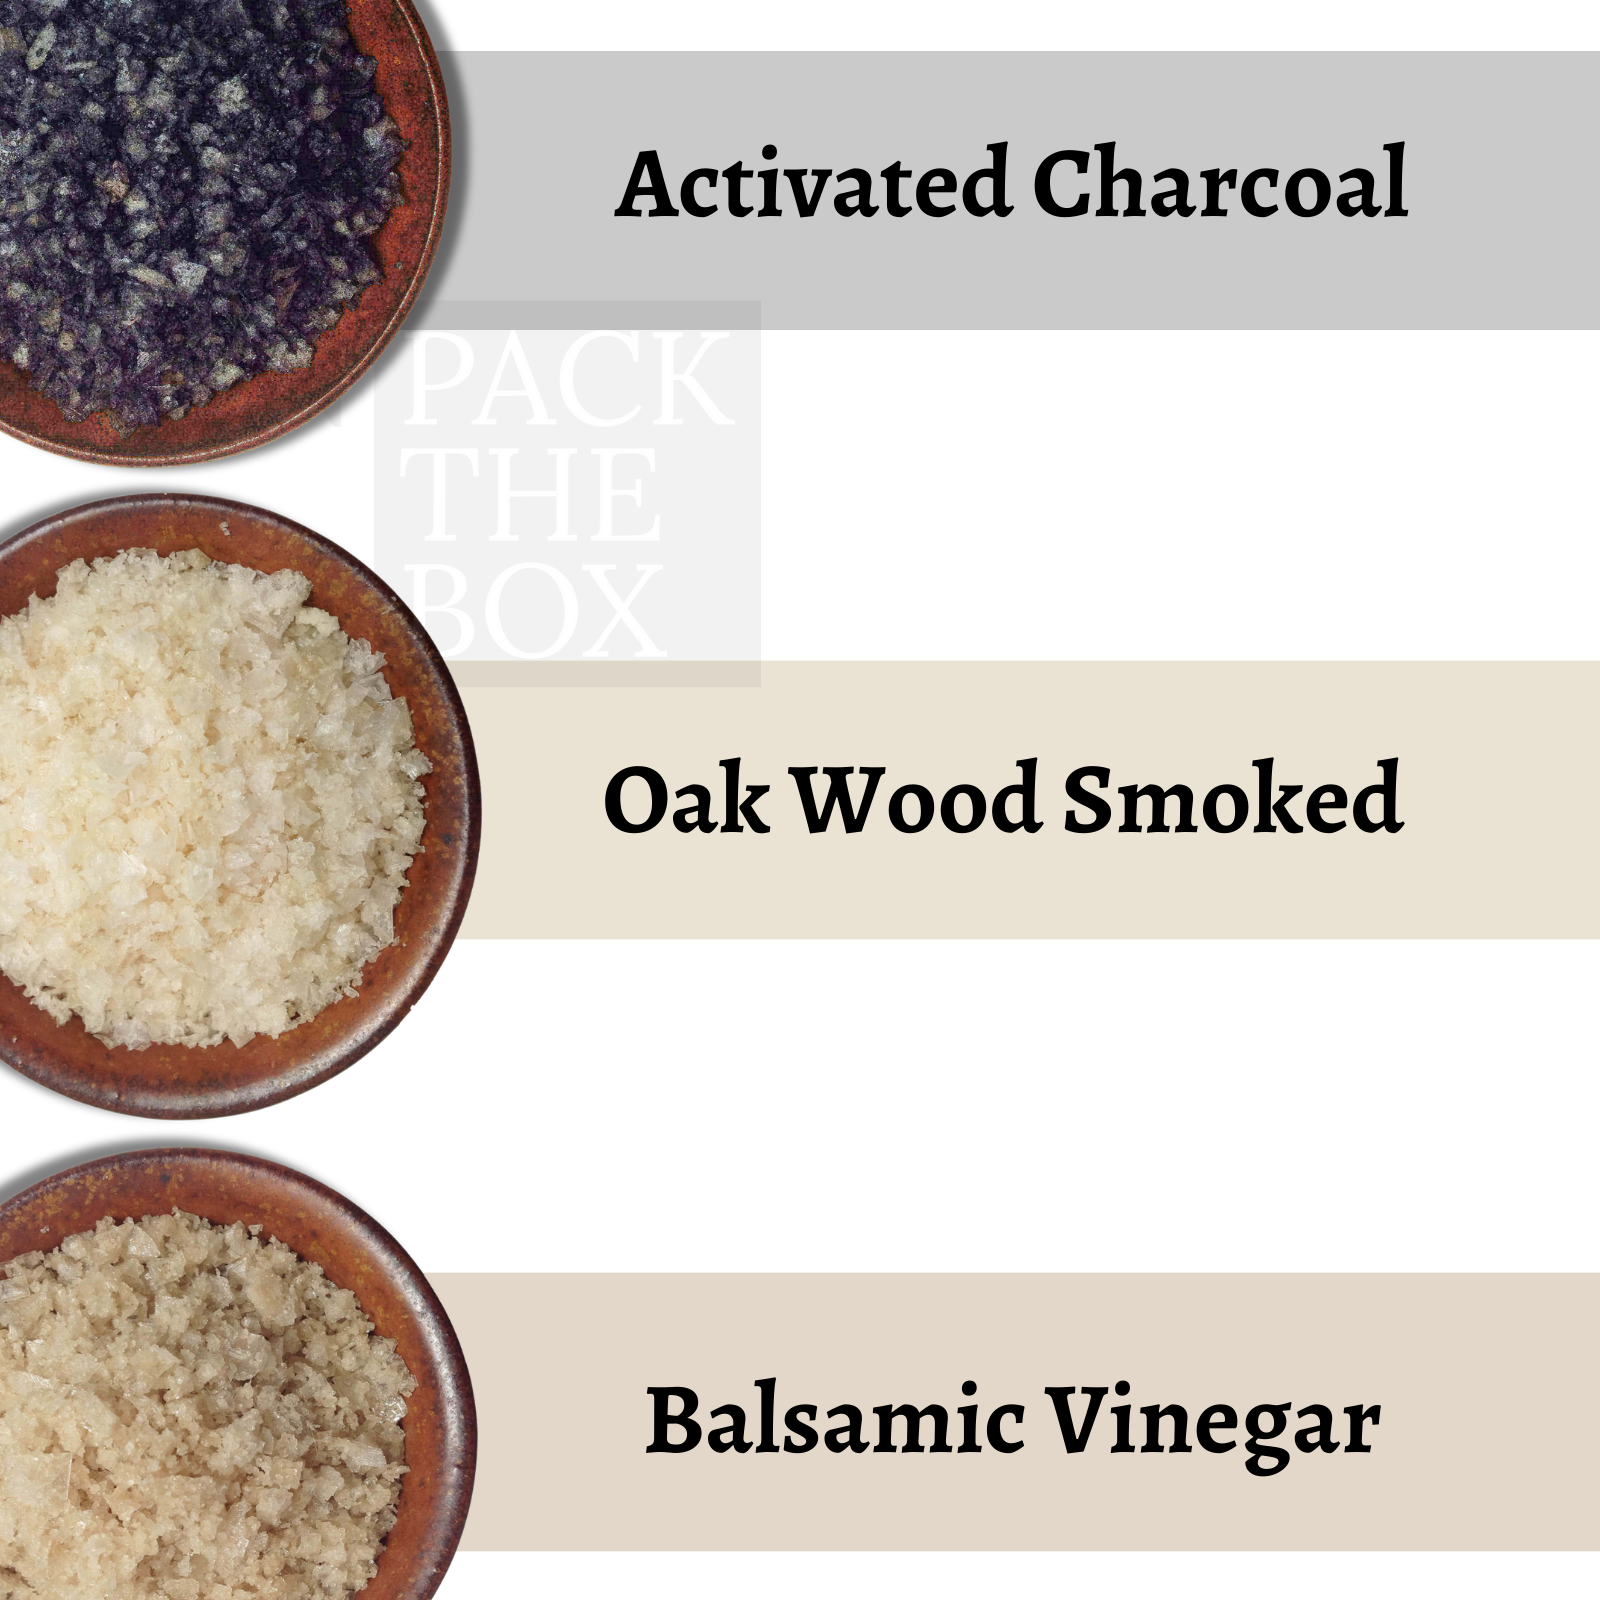 Baker & Baker Gourmet Snowflake Salt features Activated Charcoal, Oak Wood, Balsamic Vinegar, seasoning, finishing salt